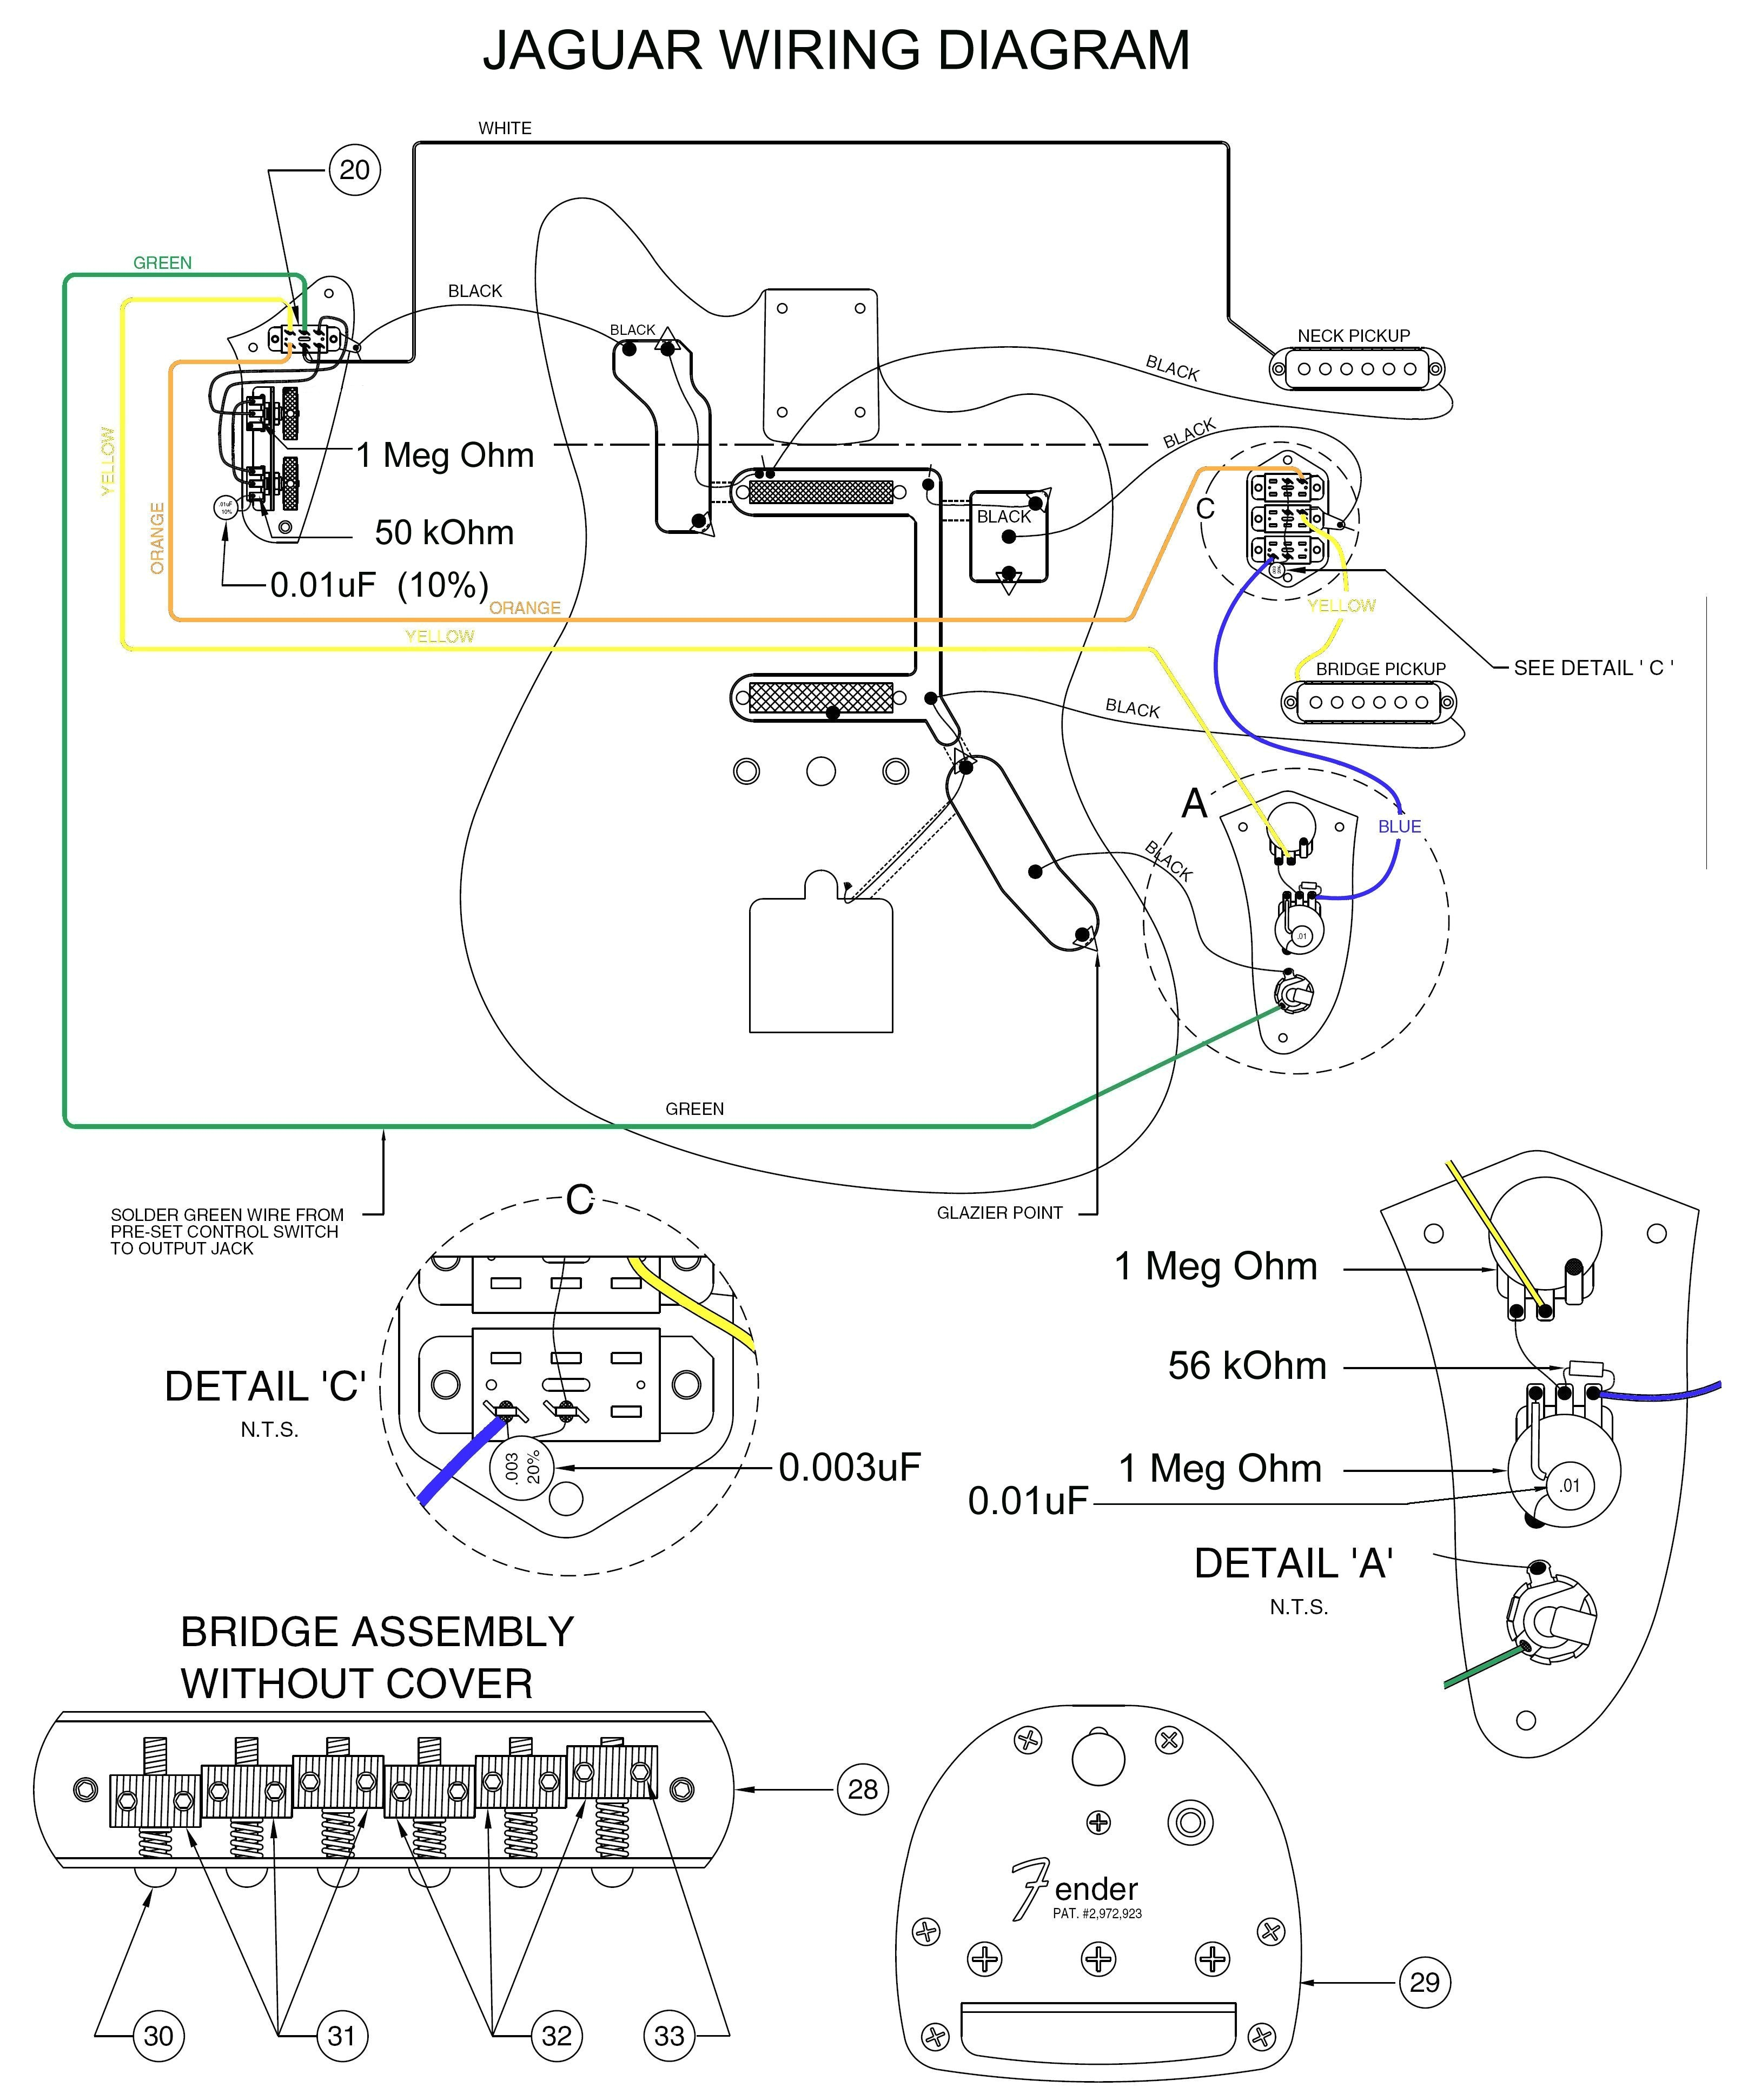 blacktop telecaster wire diagram he